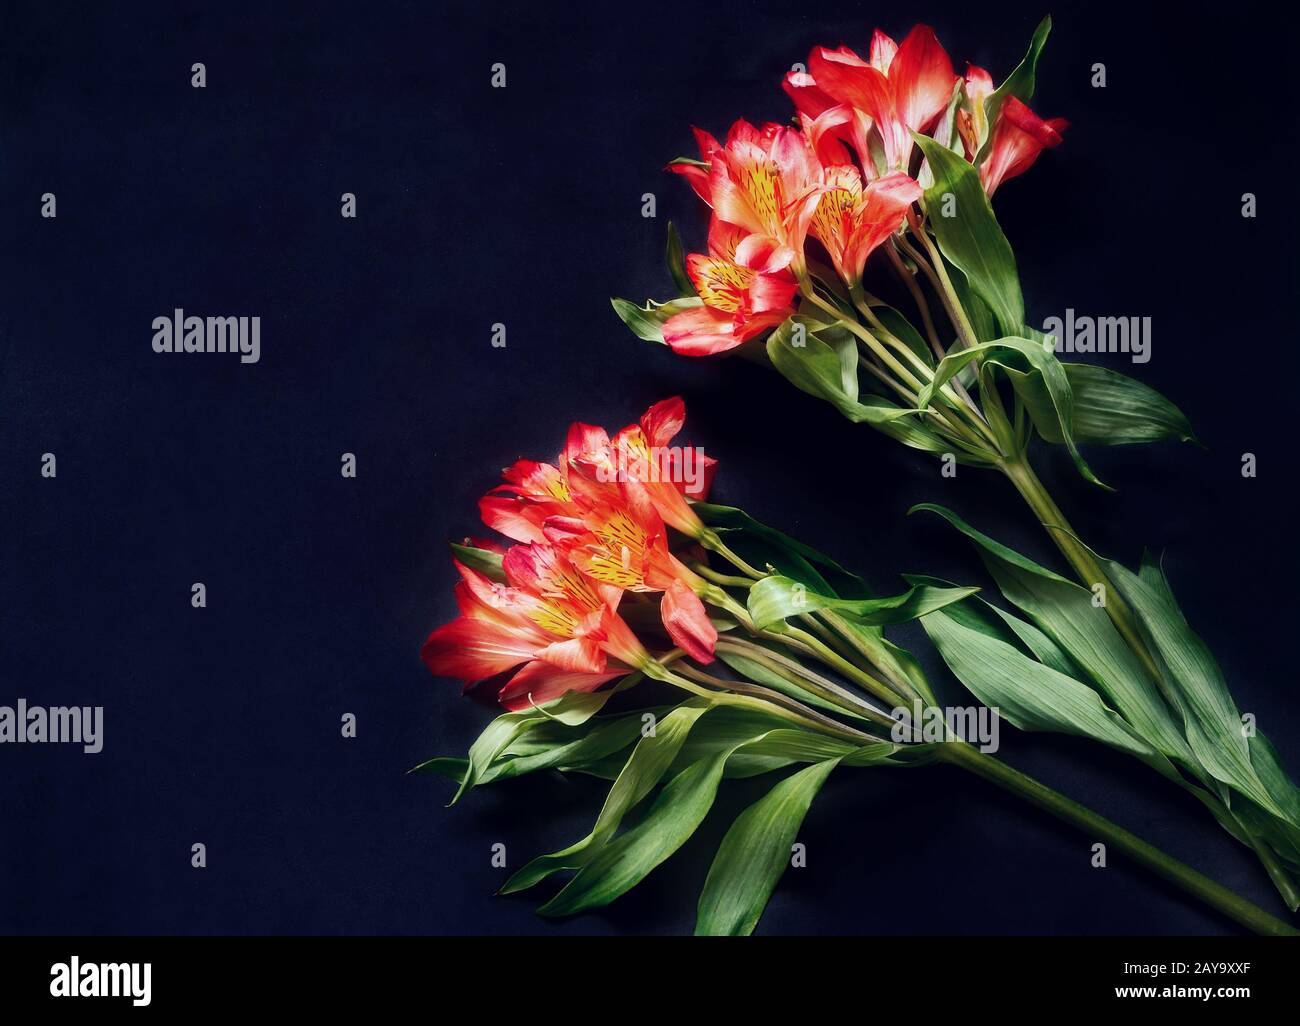 Two Amaryllis flowers on a dark background. Stock Photo